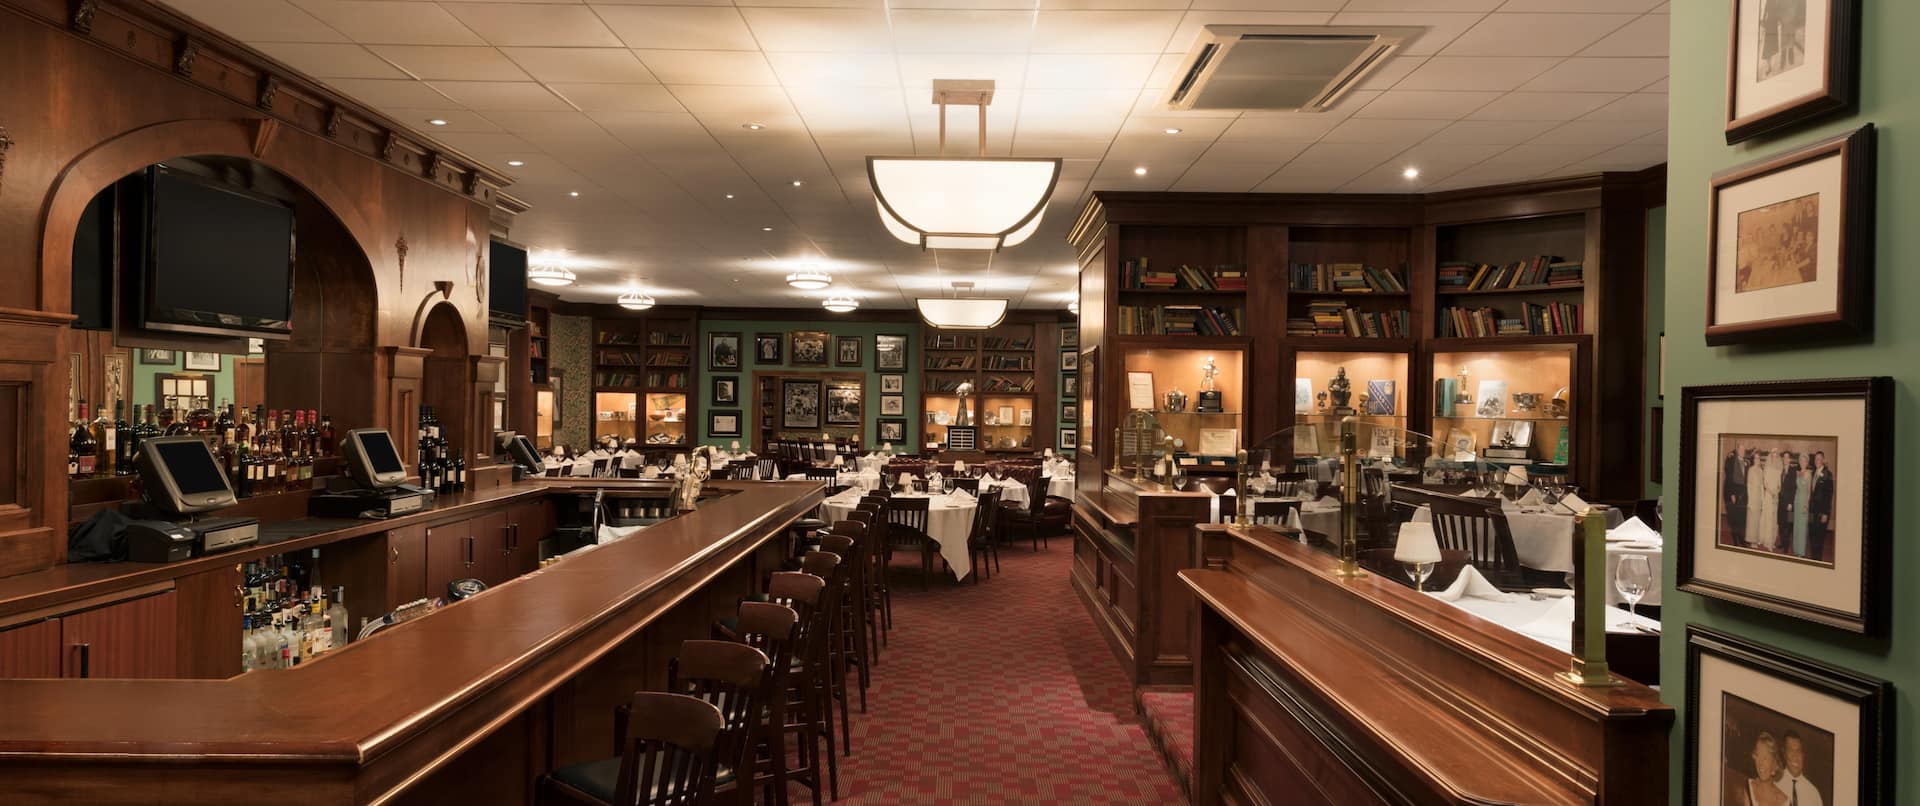 Vince Lombardi's steakhouse restaurant